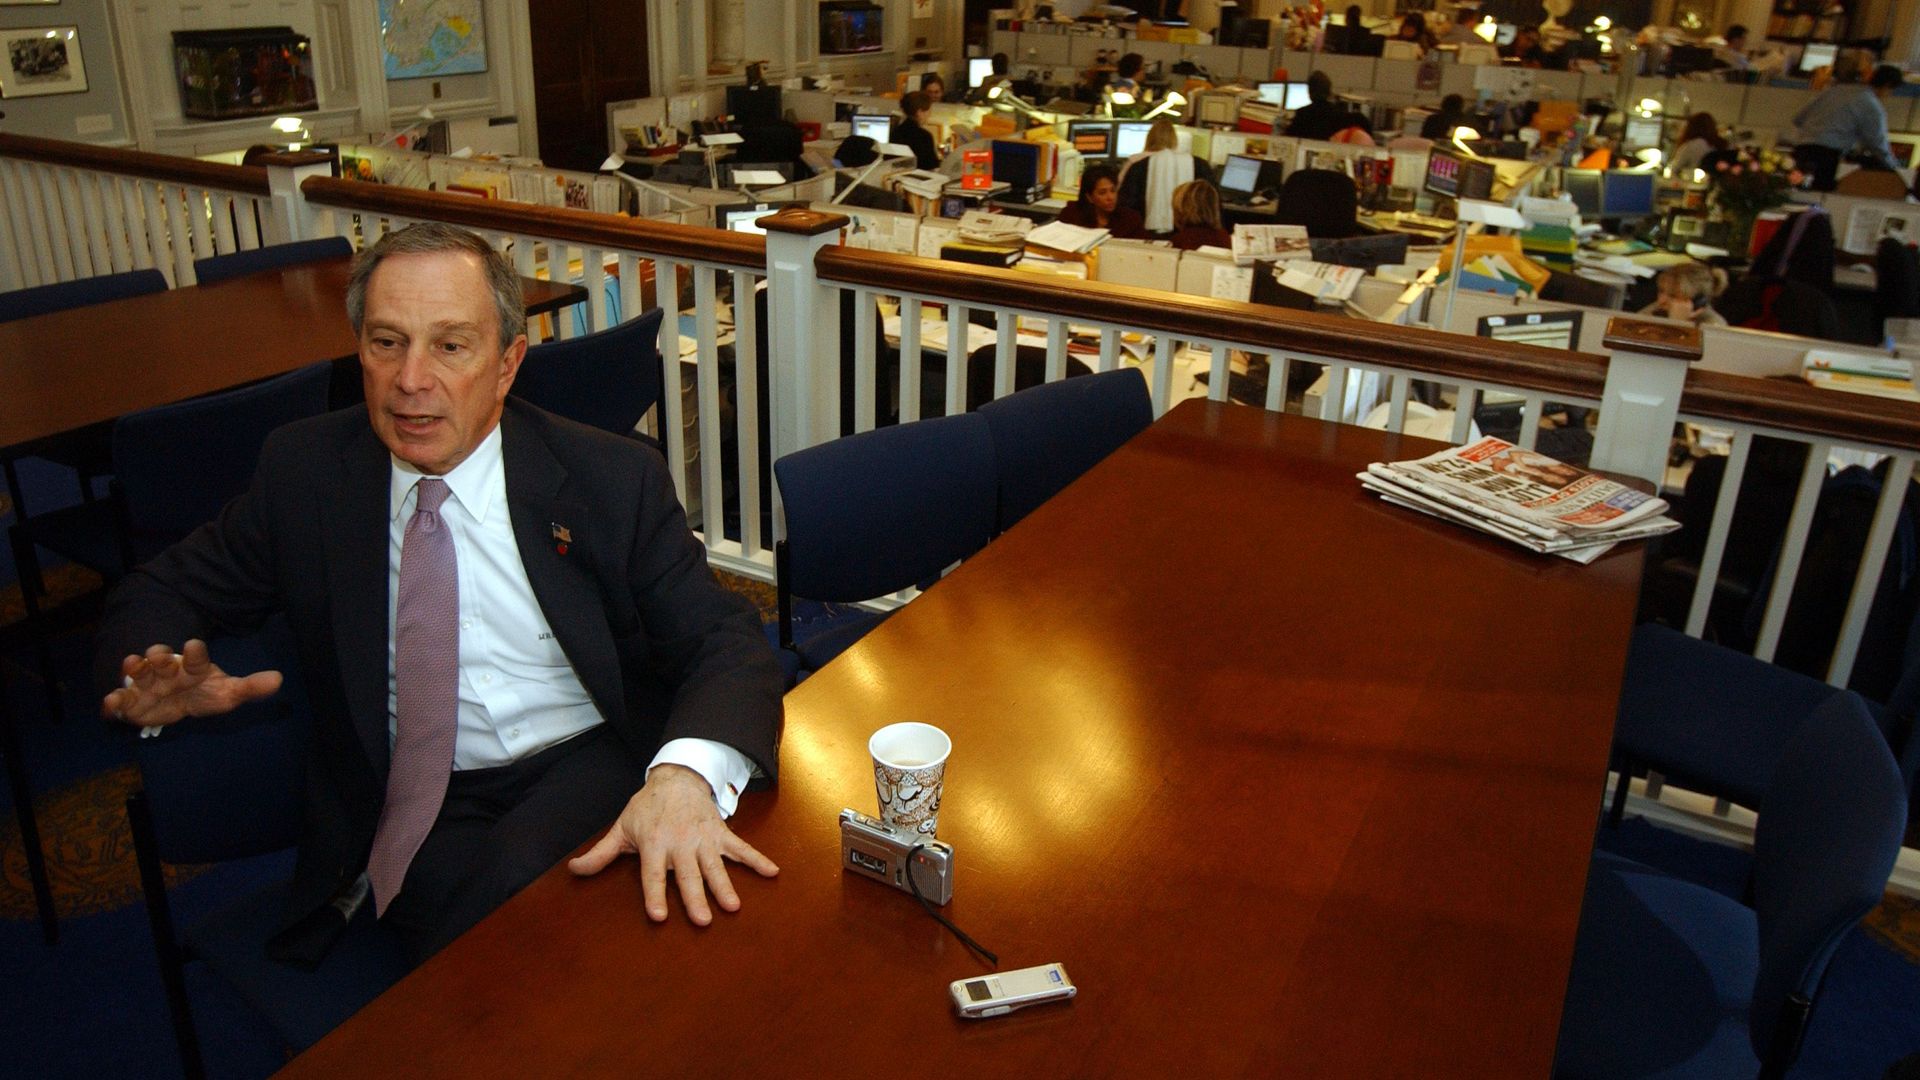 Mayor Bloomberg in 2004